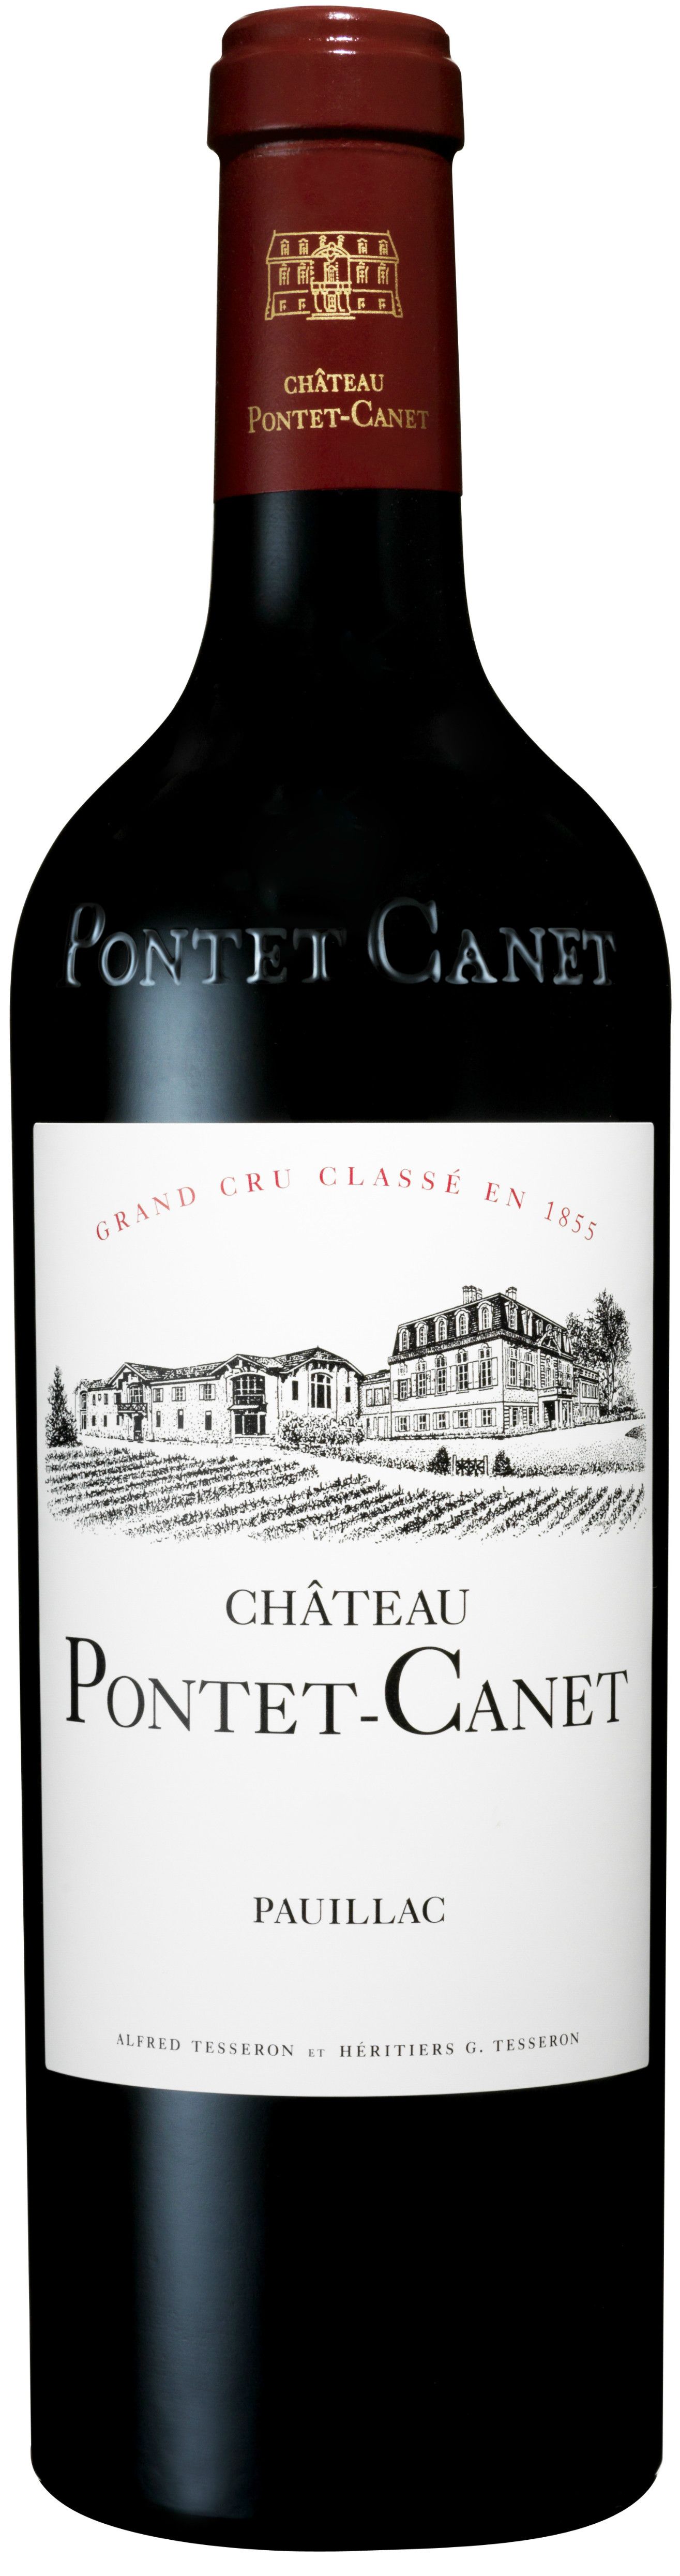 Chateau Pontet-Canet, 2011 (In 6-btls Box Set)